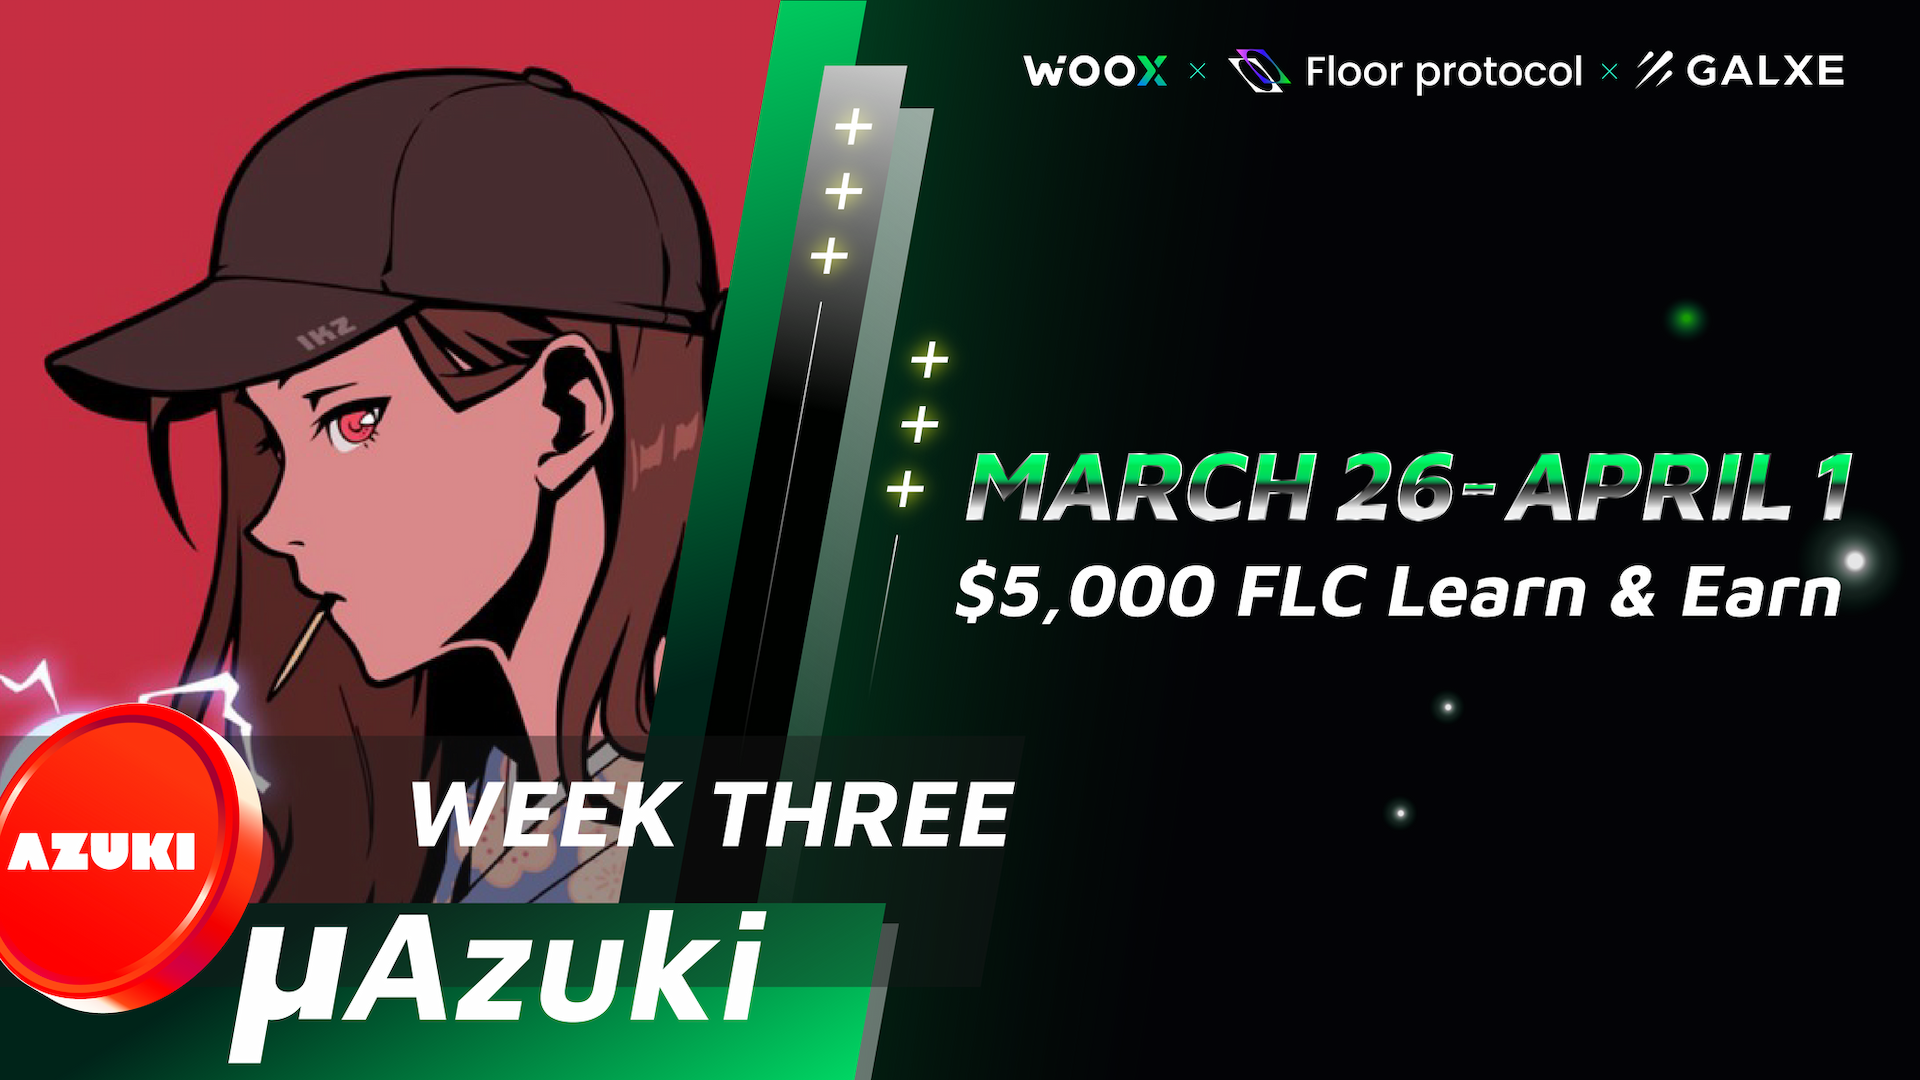 Azukis (μAzuki) $5,000 Learn and Earn